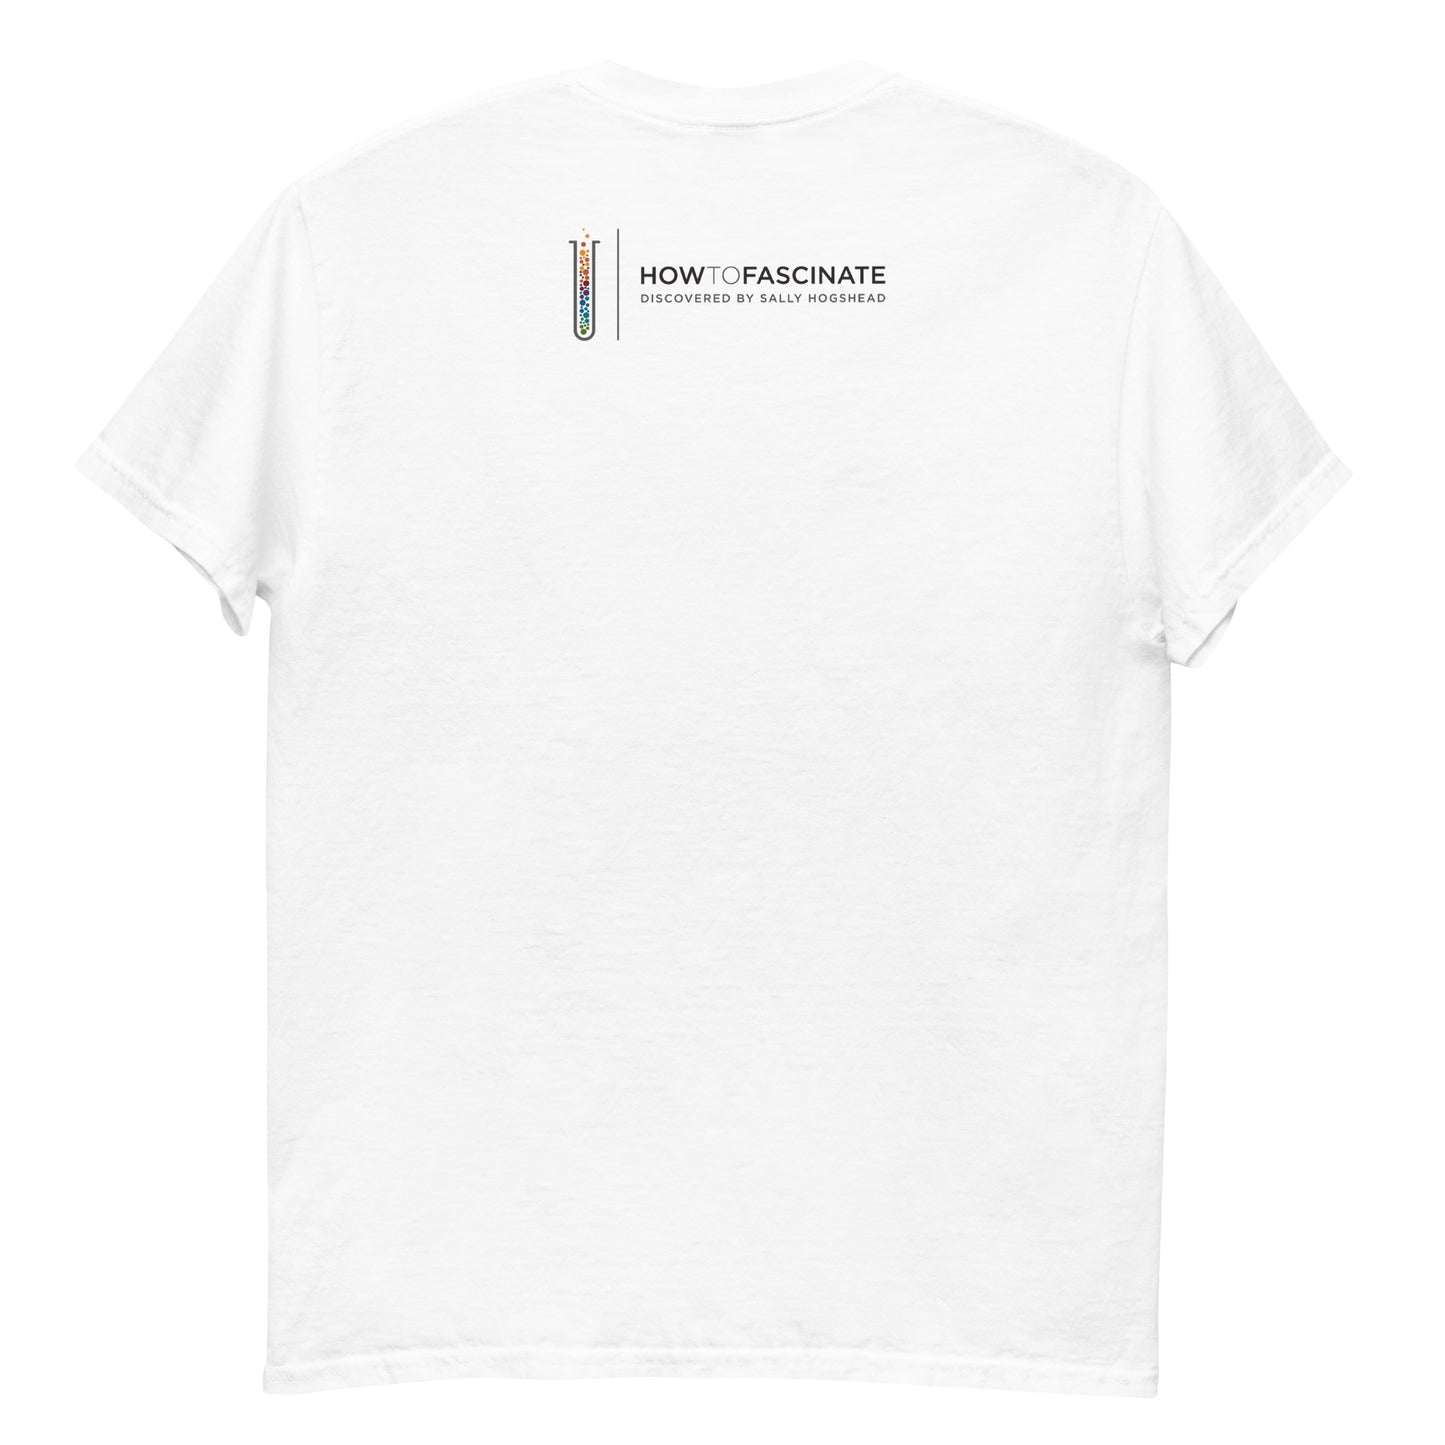 The Defender - Men's Archetype short sleeve t-shirt